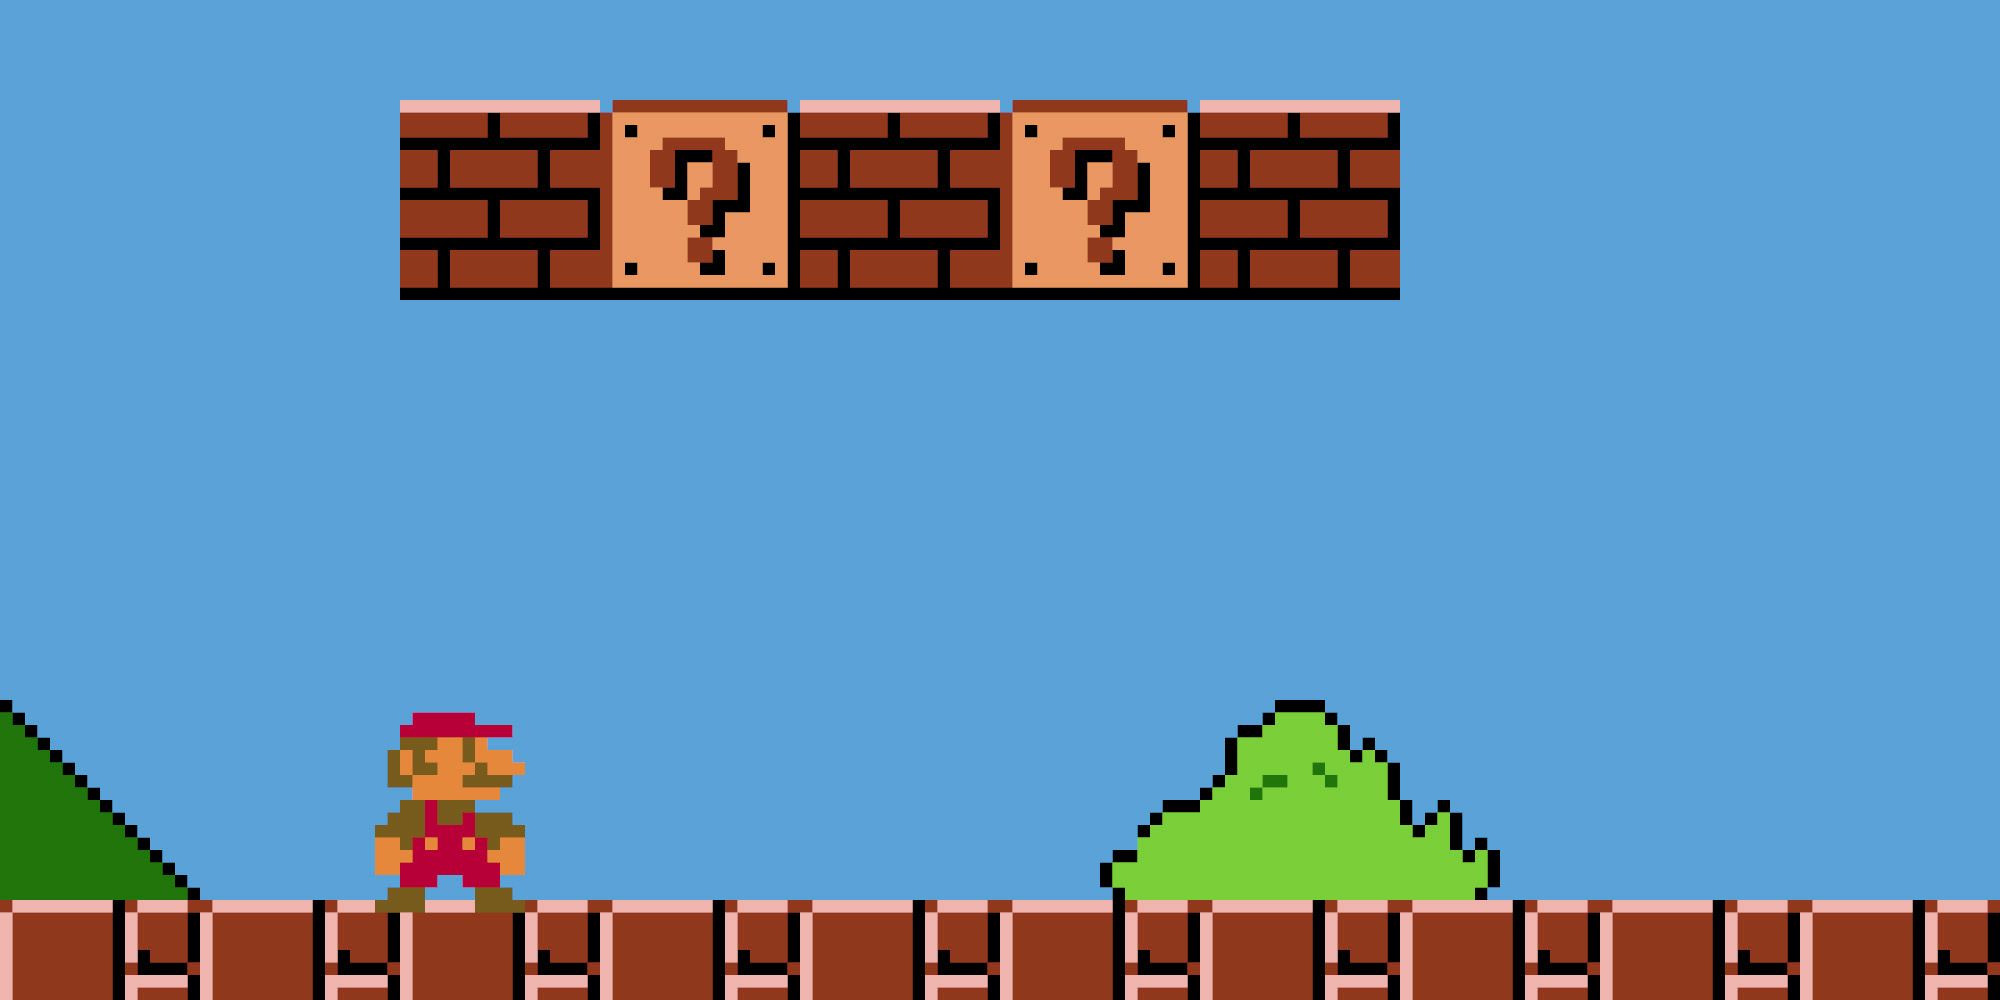 Super Mario Bros Deluxe - Mario Standing Next To A Row Of Blocks